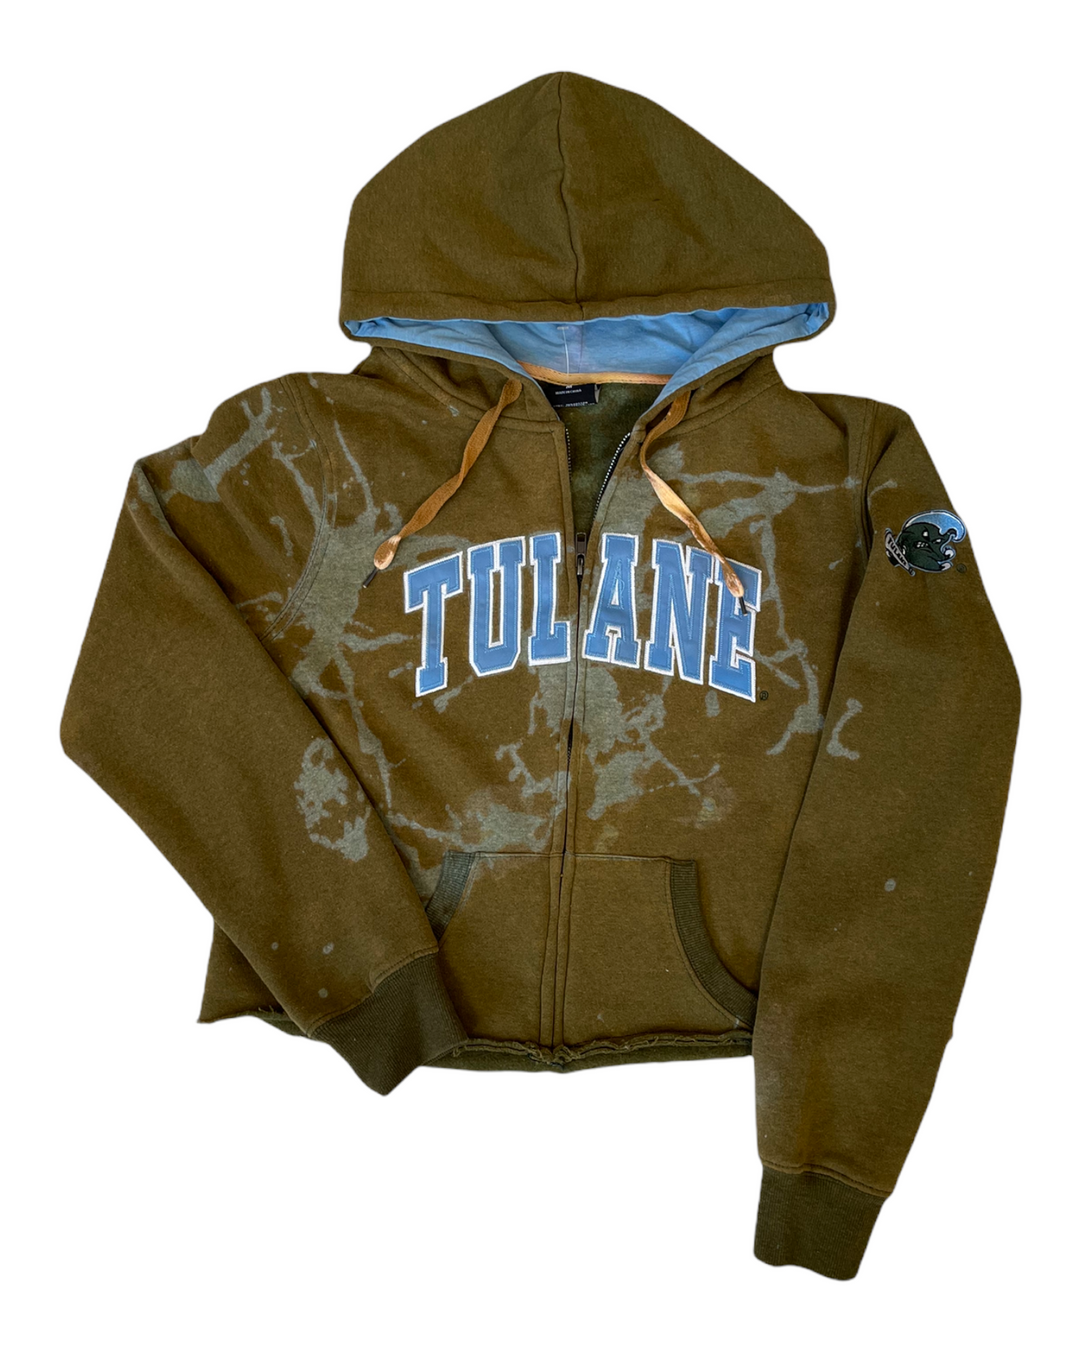 Tulane Vintage Cropped Zip Up Sweatshirt